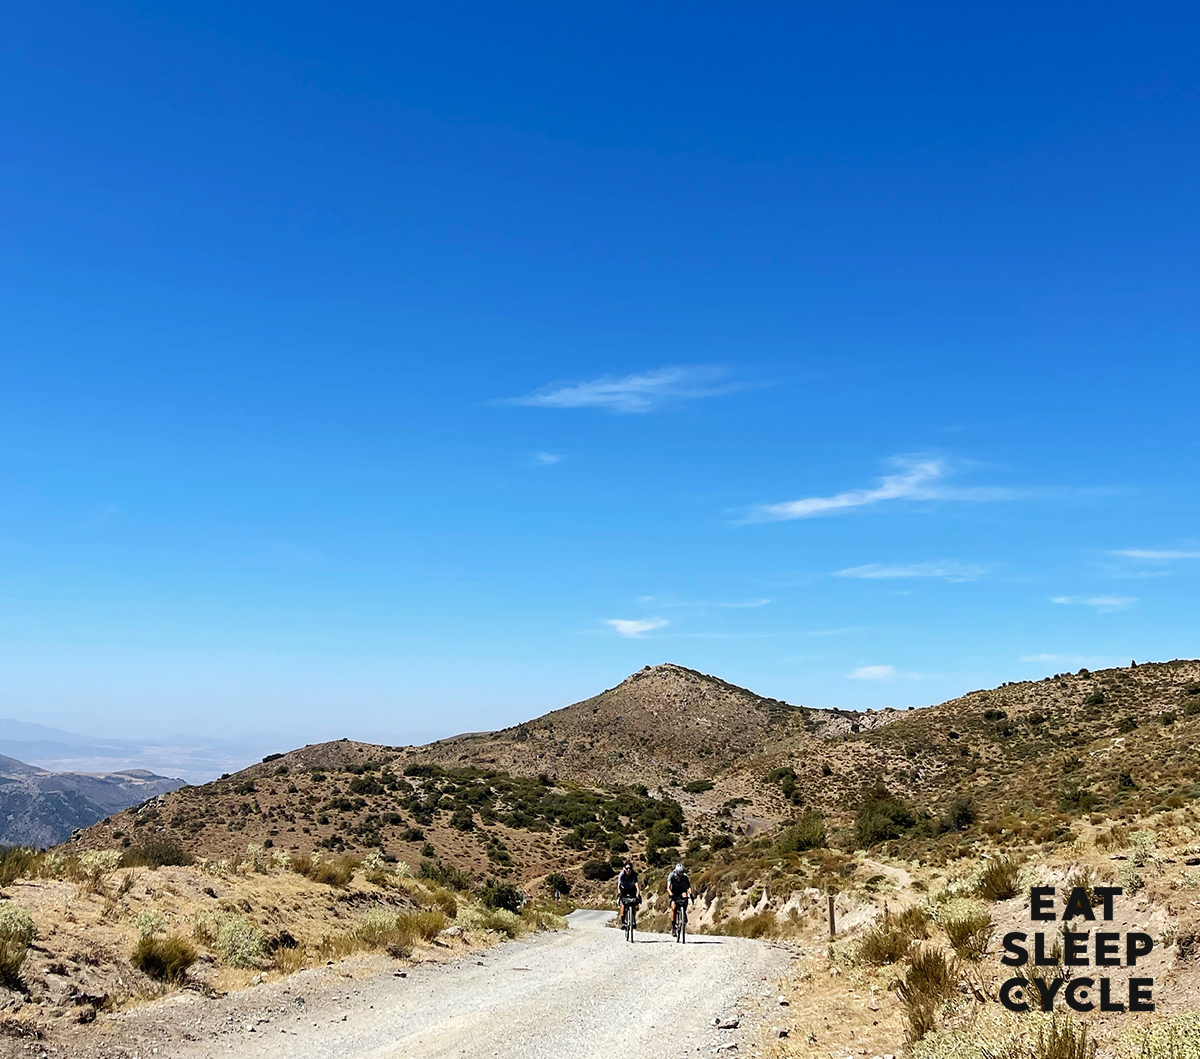 Eat-Sleep-Cycle-Badlands-Gravel-Cycling-Gorafe